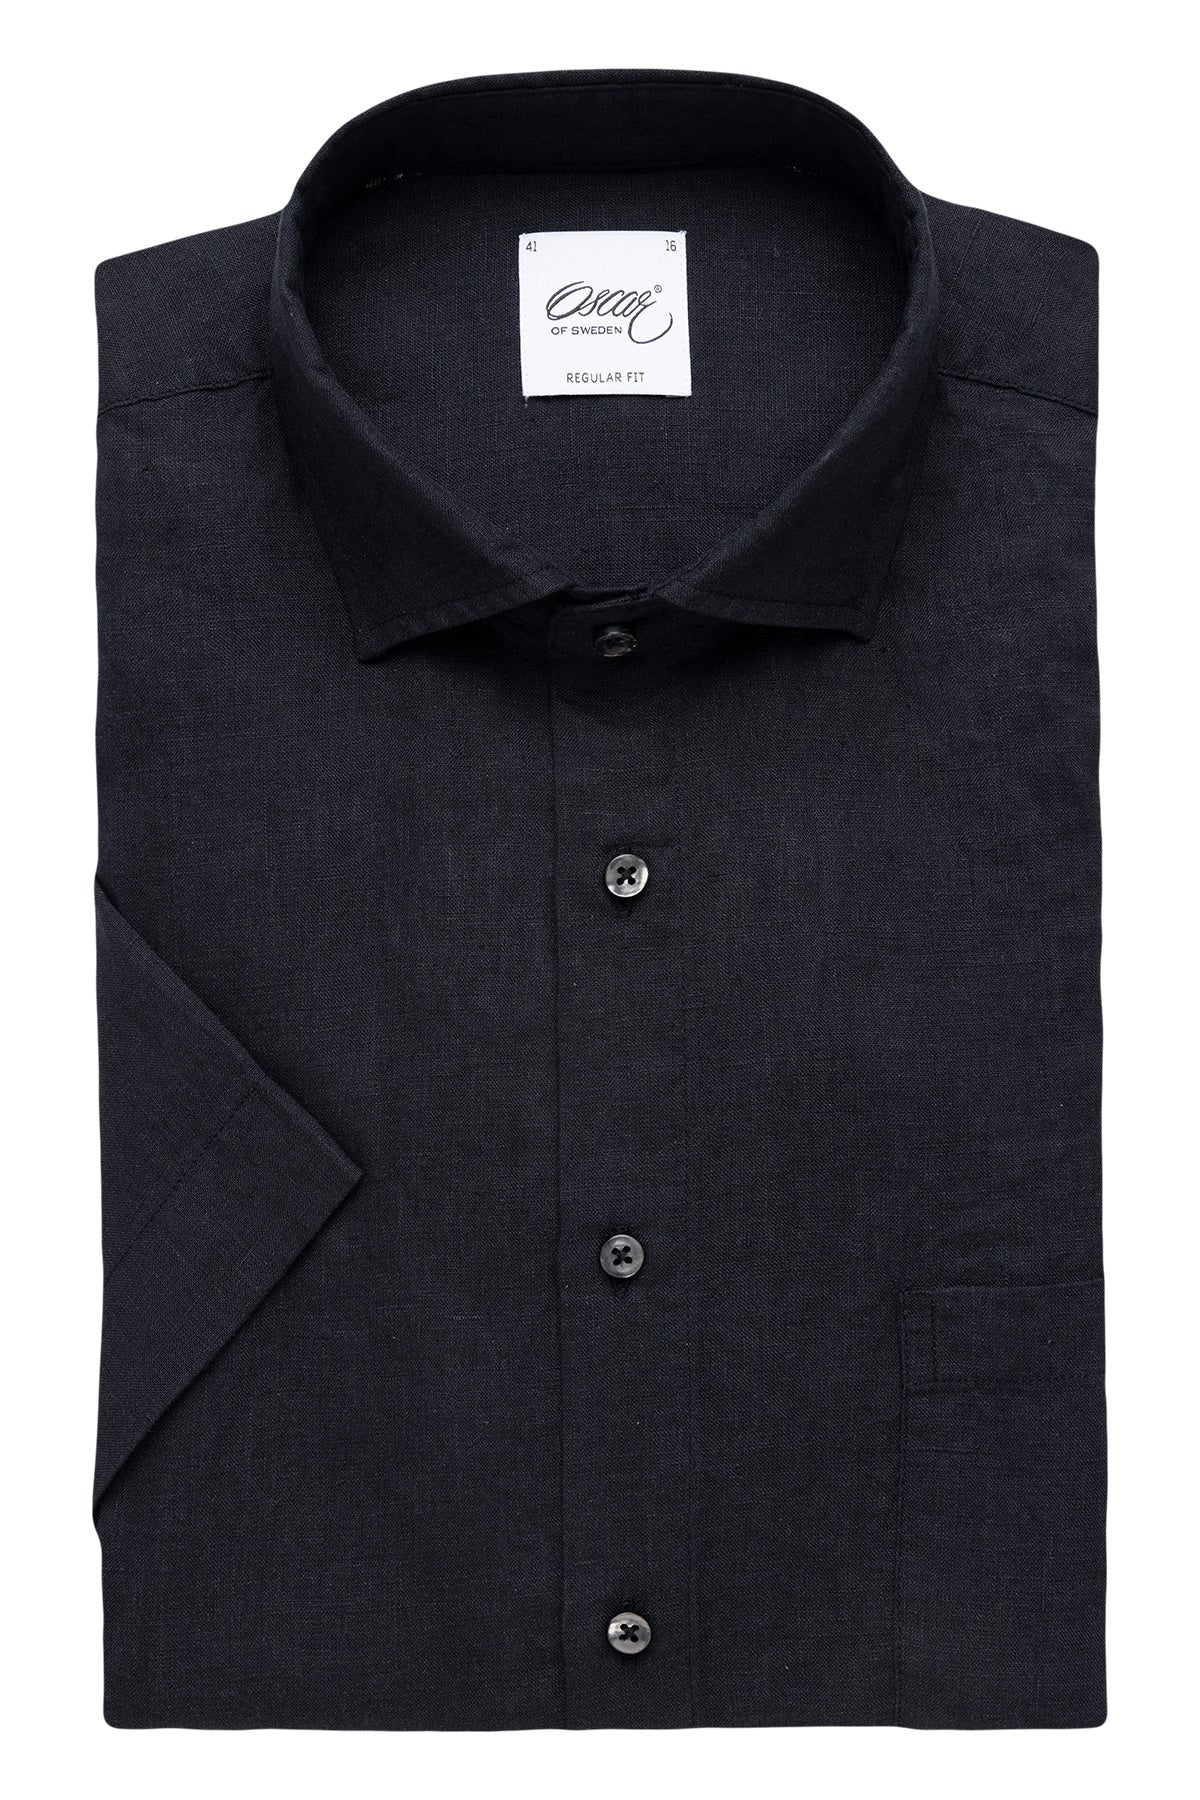 Black short sleeve regular fit linen shirt